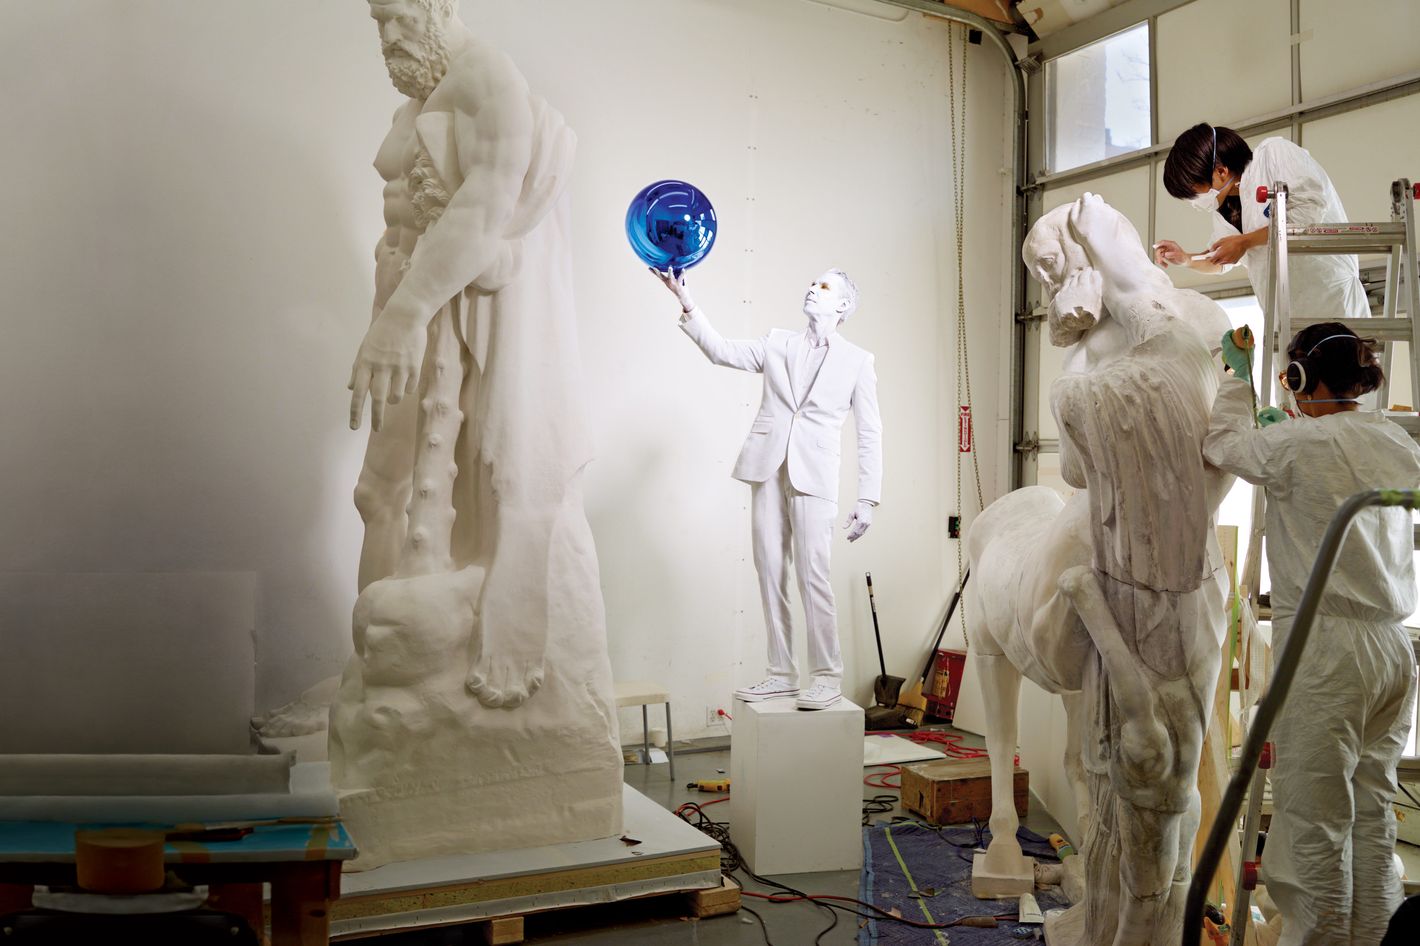 Jeff Koons: Gazing Ball paintings at Gagosian